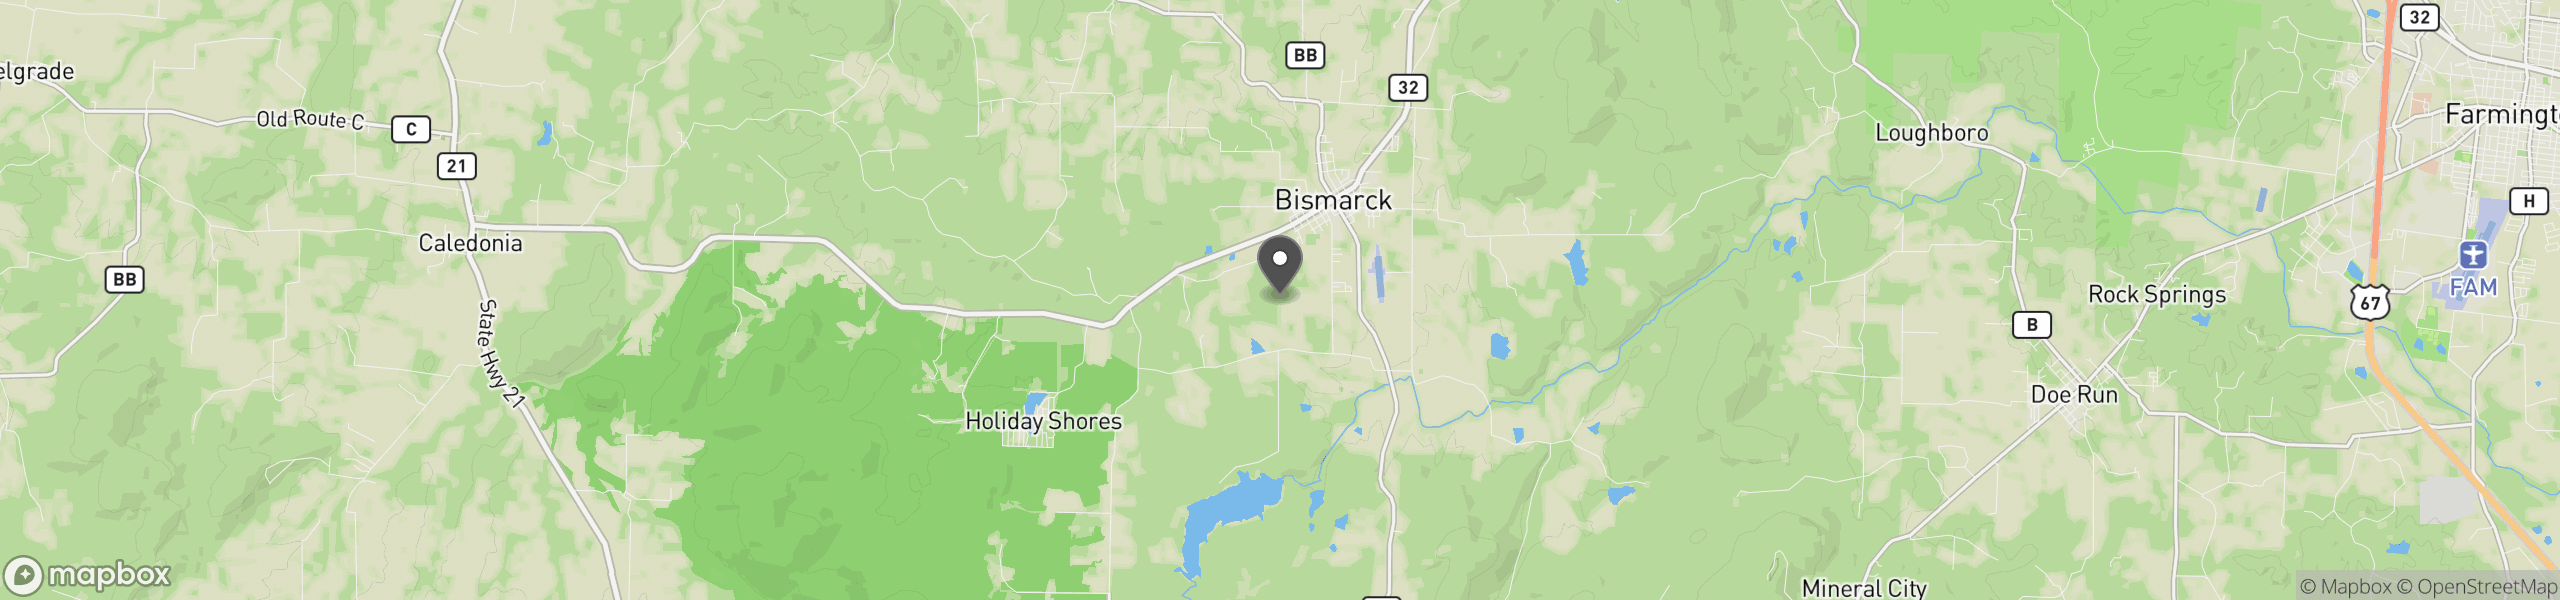 Bismarck, MO